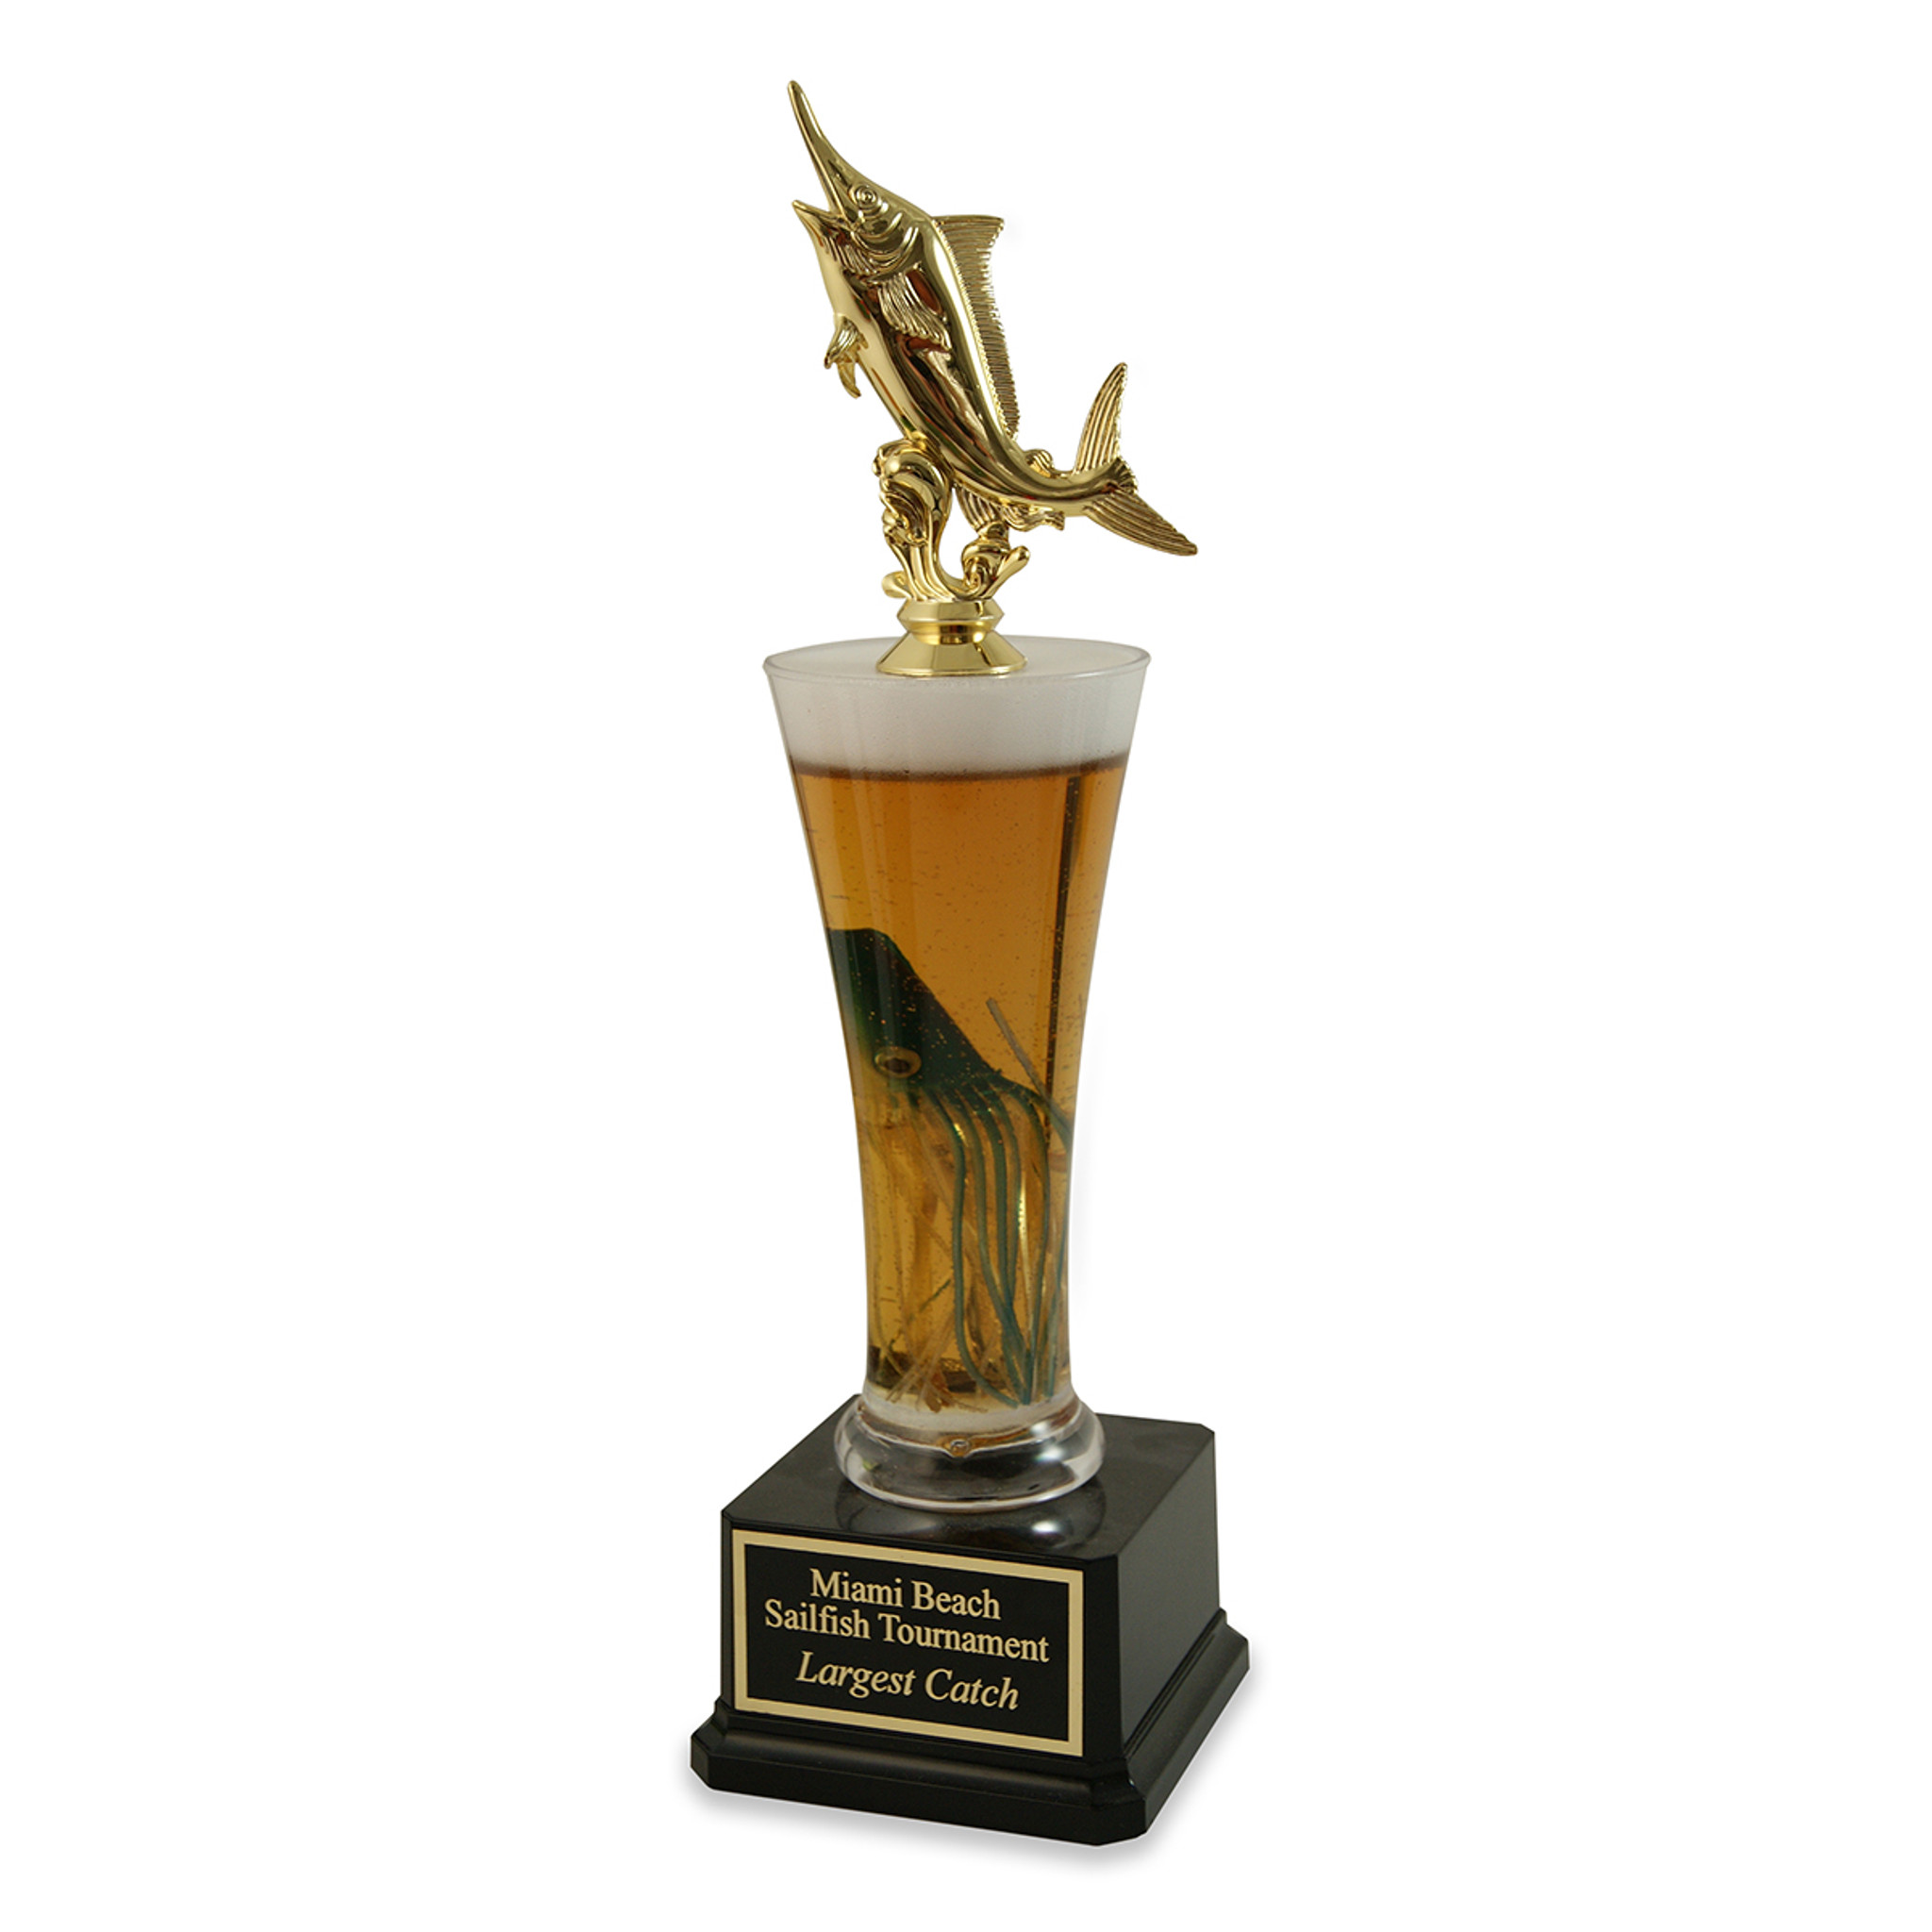 https://cdn11.bigcommerce.com/s-241f7/images/stencil/2048x2048/products/64/1854/Sailfish_fishing_beer_trophy_award__88737.1356129102.jpg?c=2